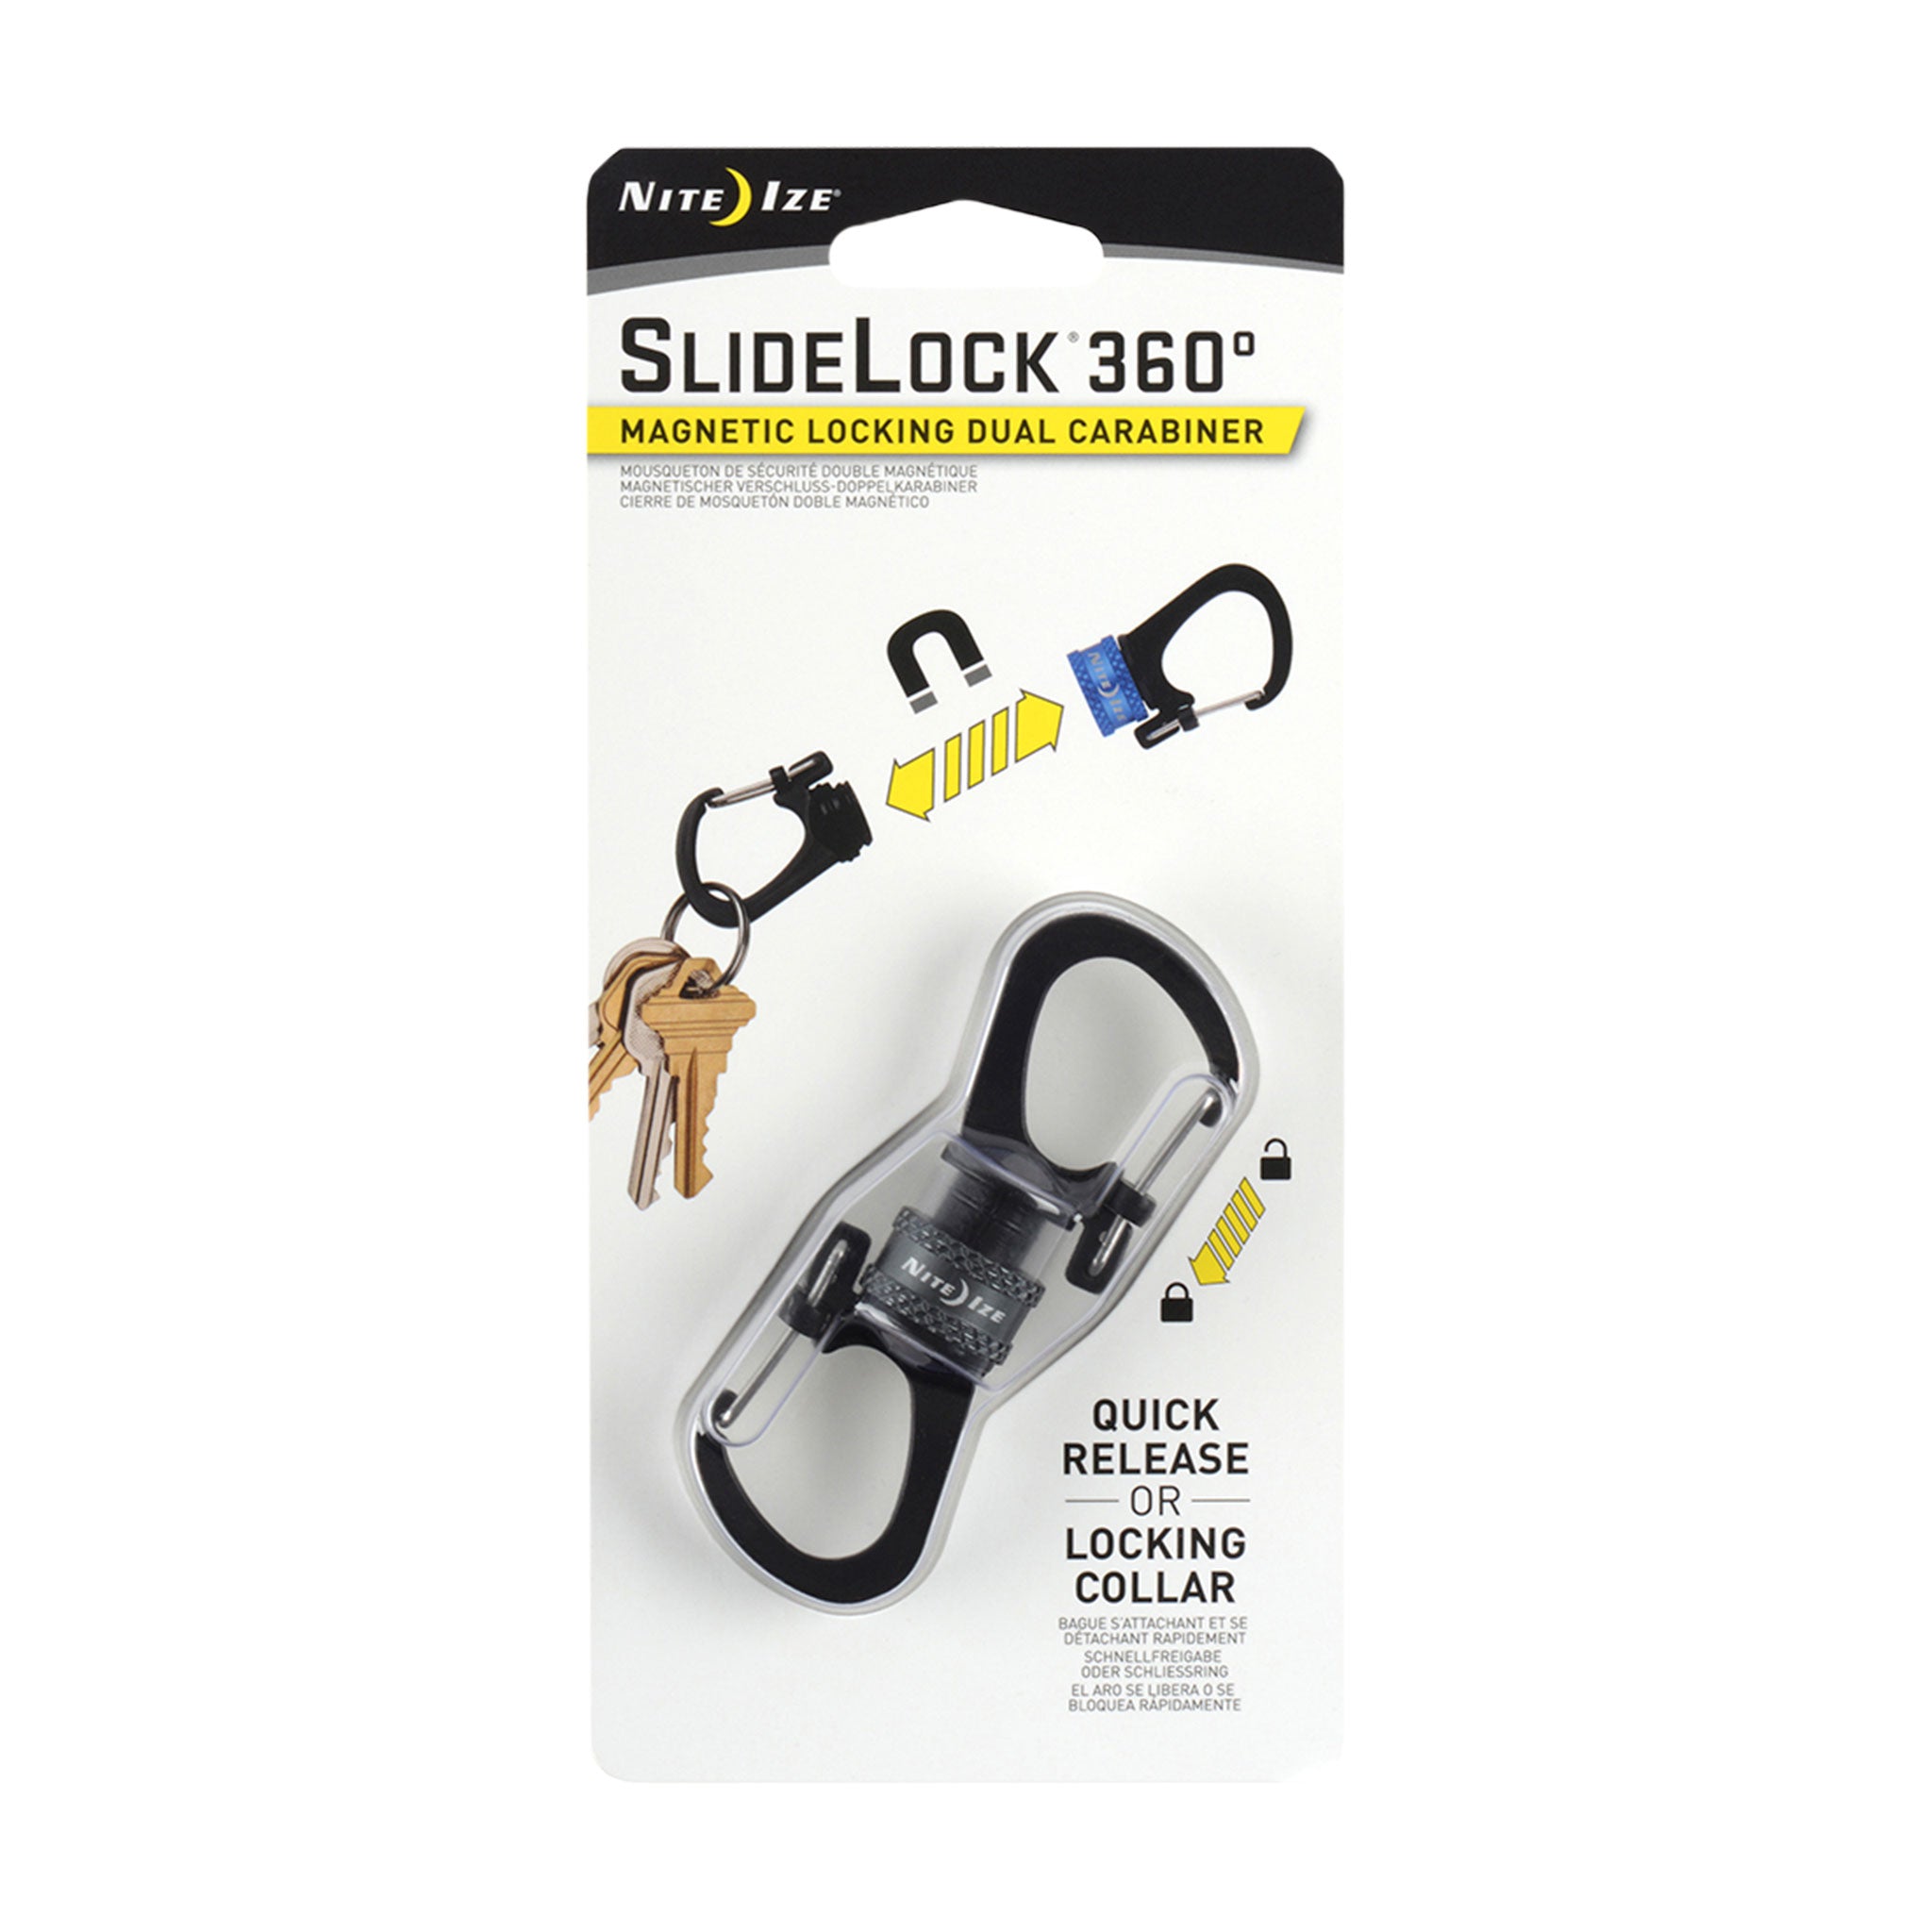 Nite Ize - Slidelock 360 Magnetic Locking Dual Carabiner - Charcoal